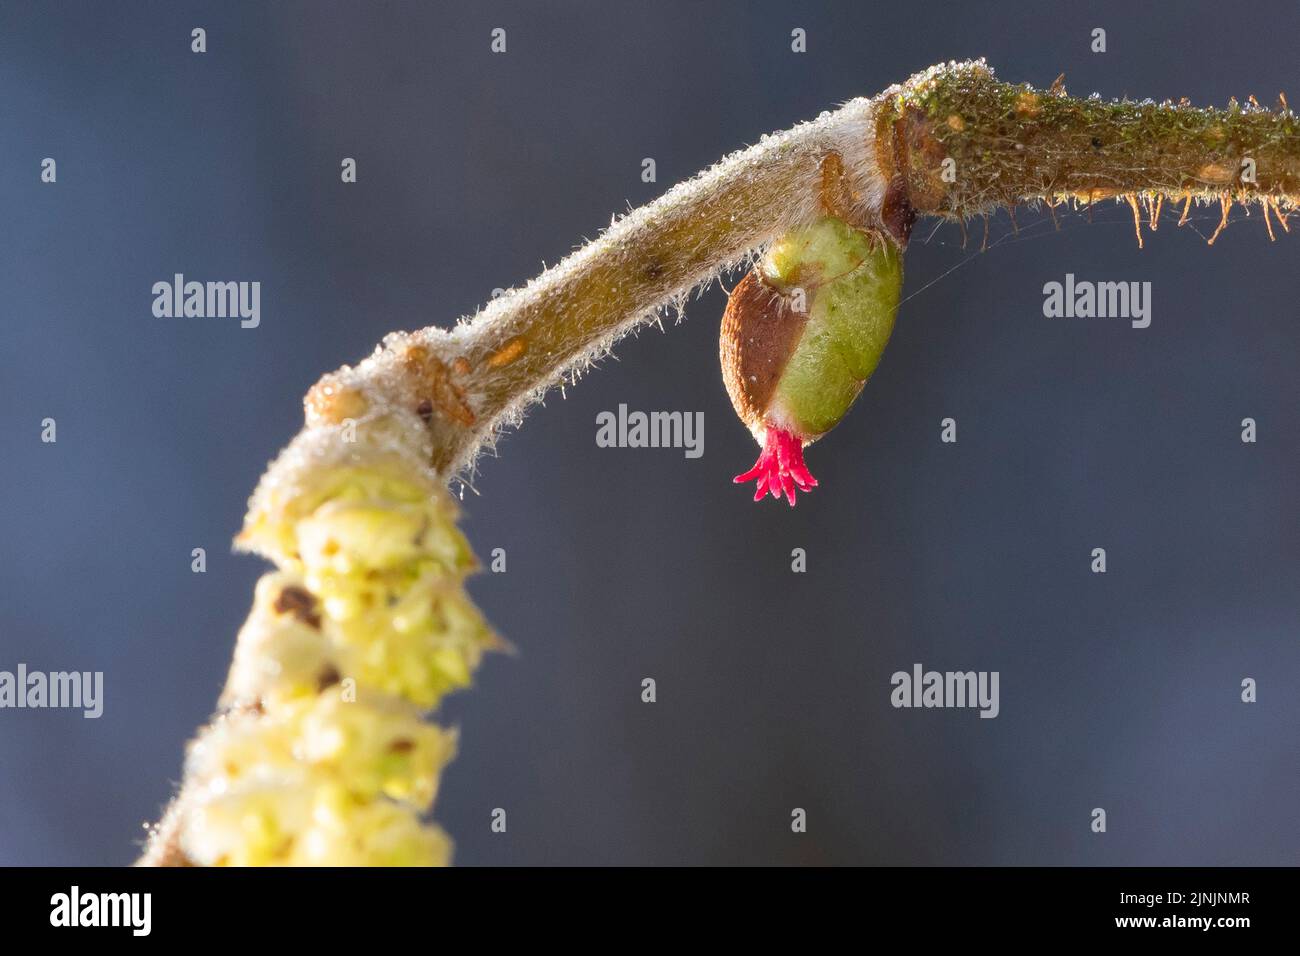 Common hazel (Corylus avellana), male and female flowers, Germany Stock Photo